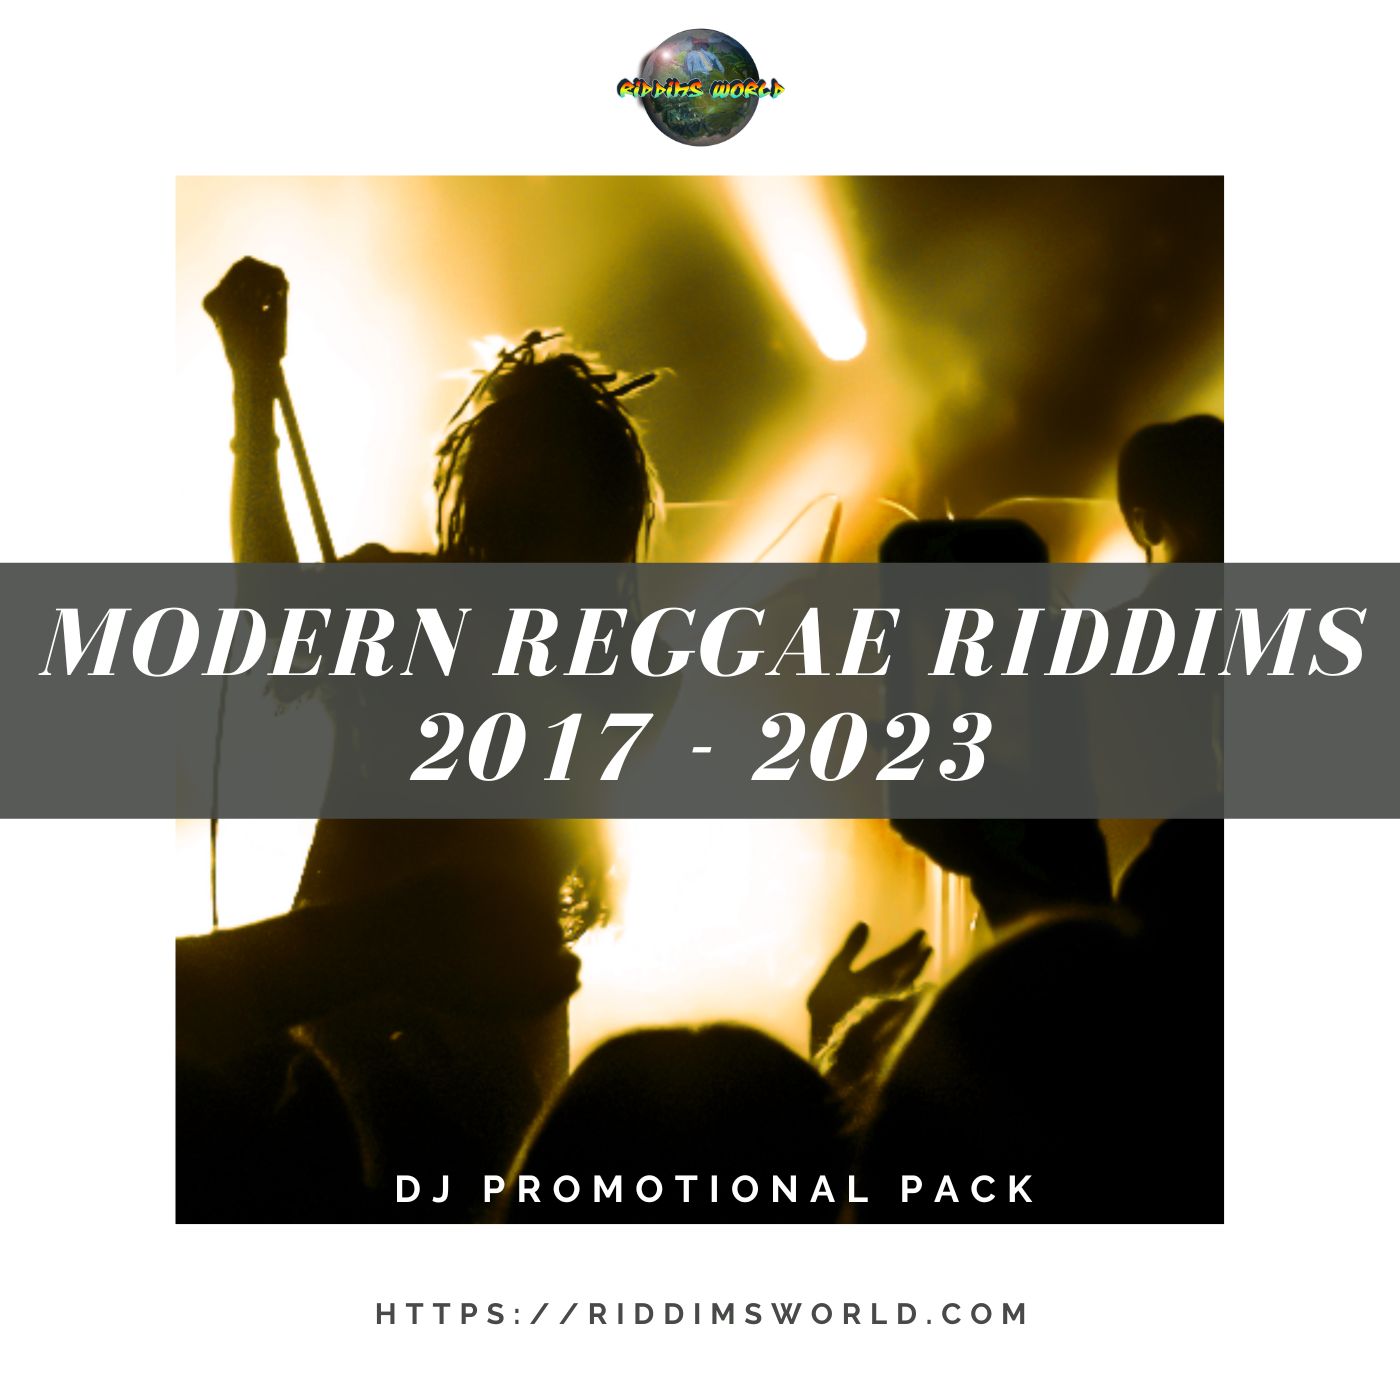 reggae-riddims-2017-2023